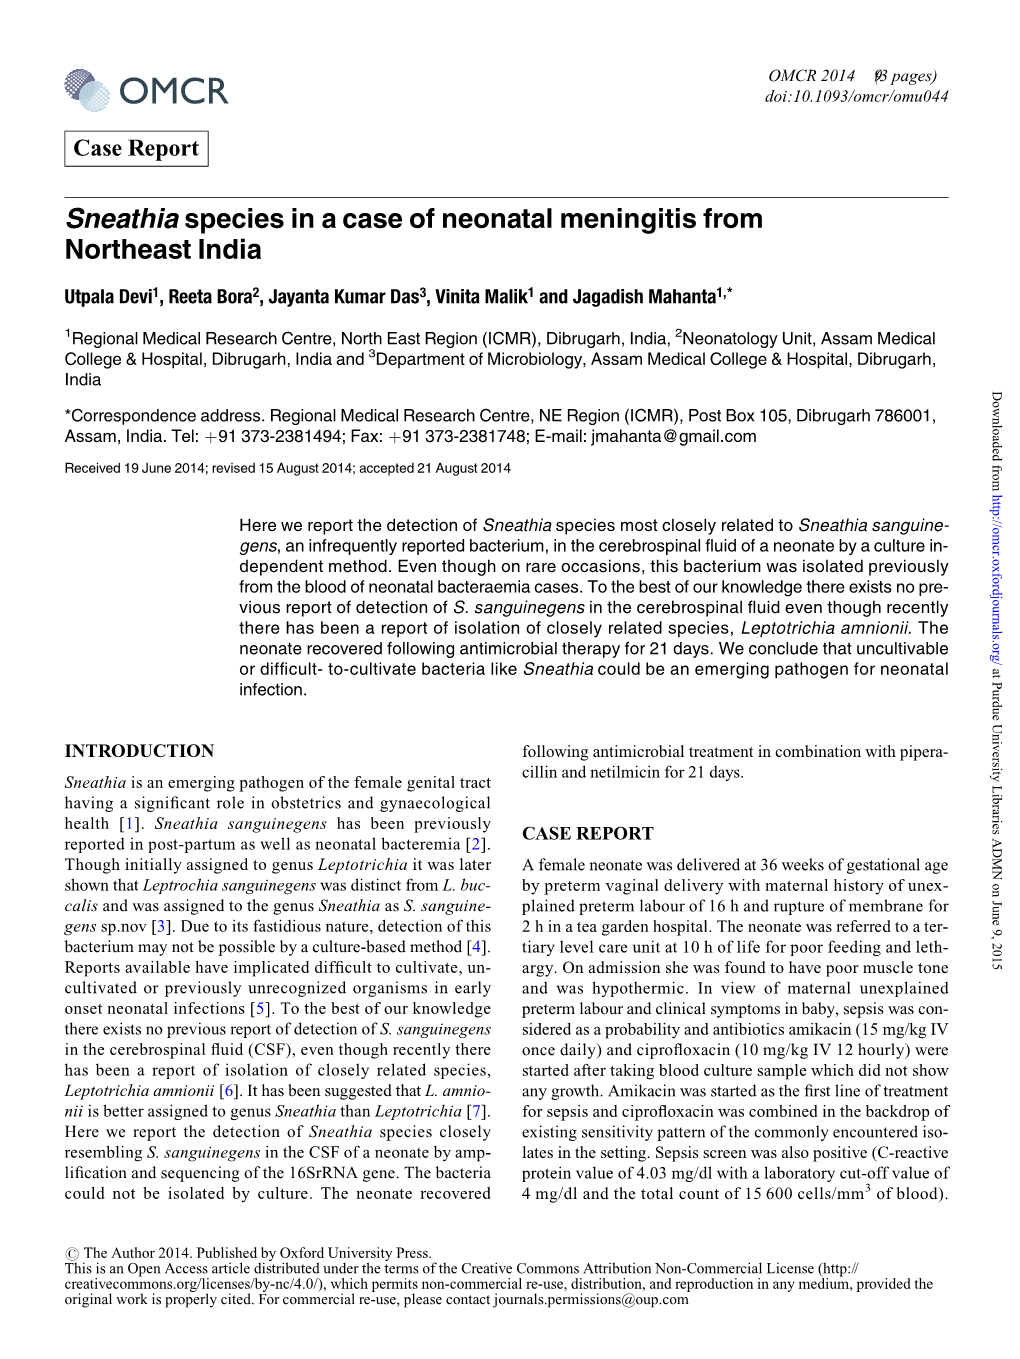 Sneathia Species in a Case of Neonatal Meningitis from Northeast India